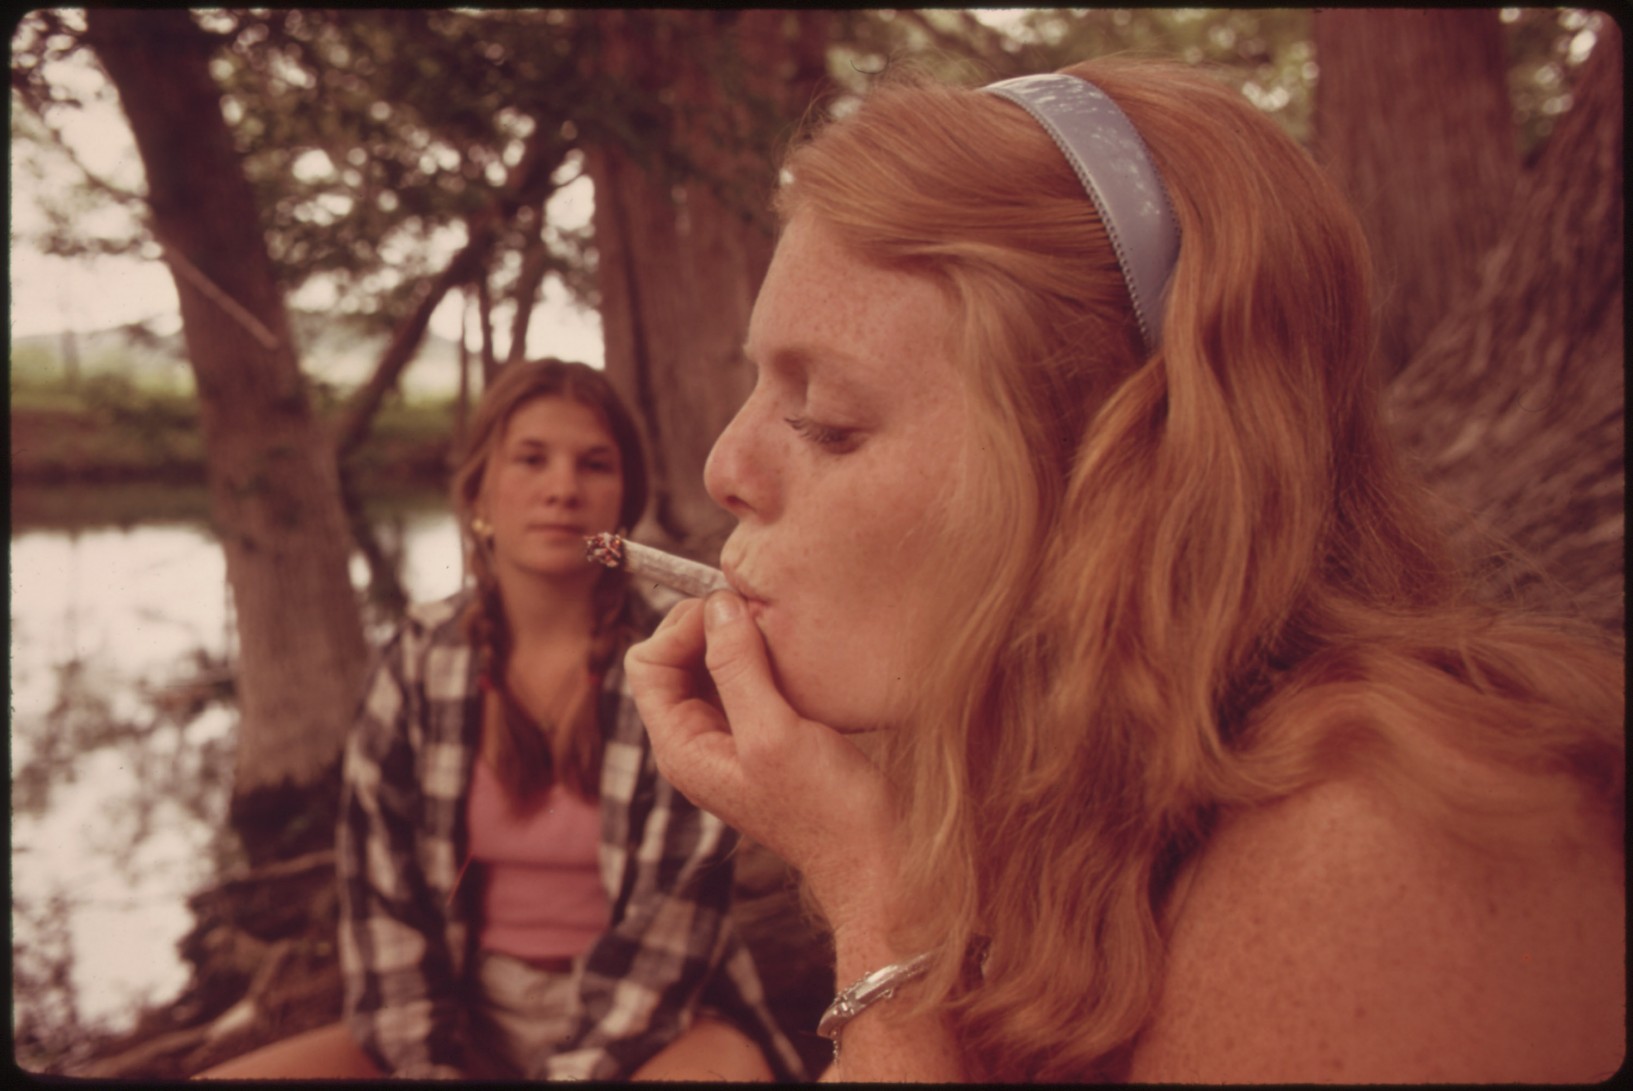 two teenagers smoke a marijuana cigarette in a park